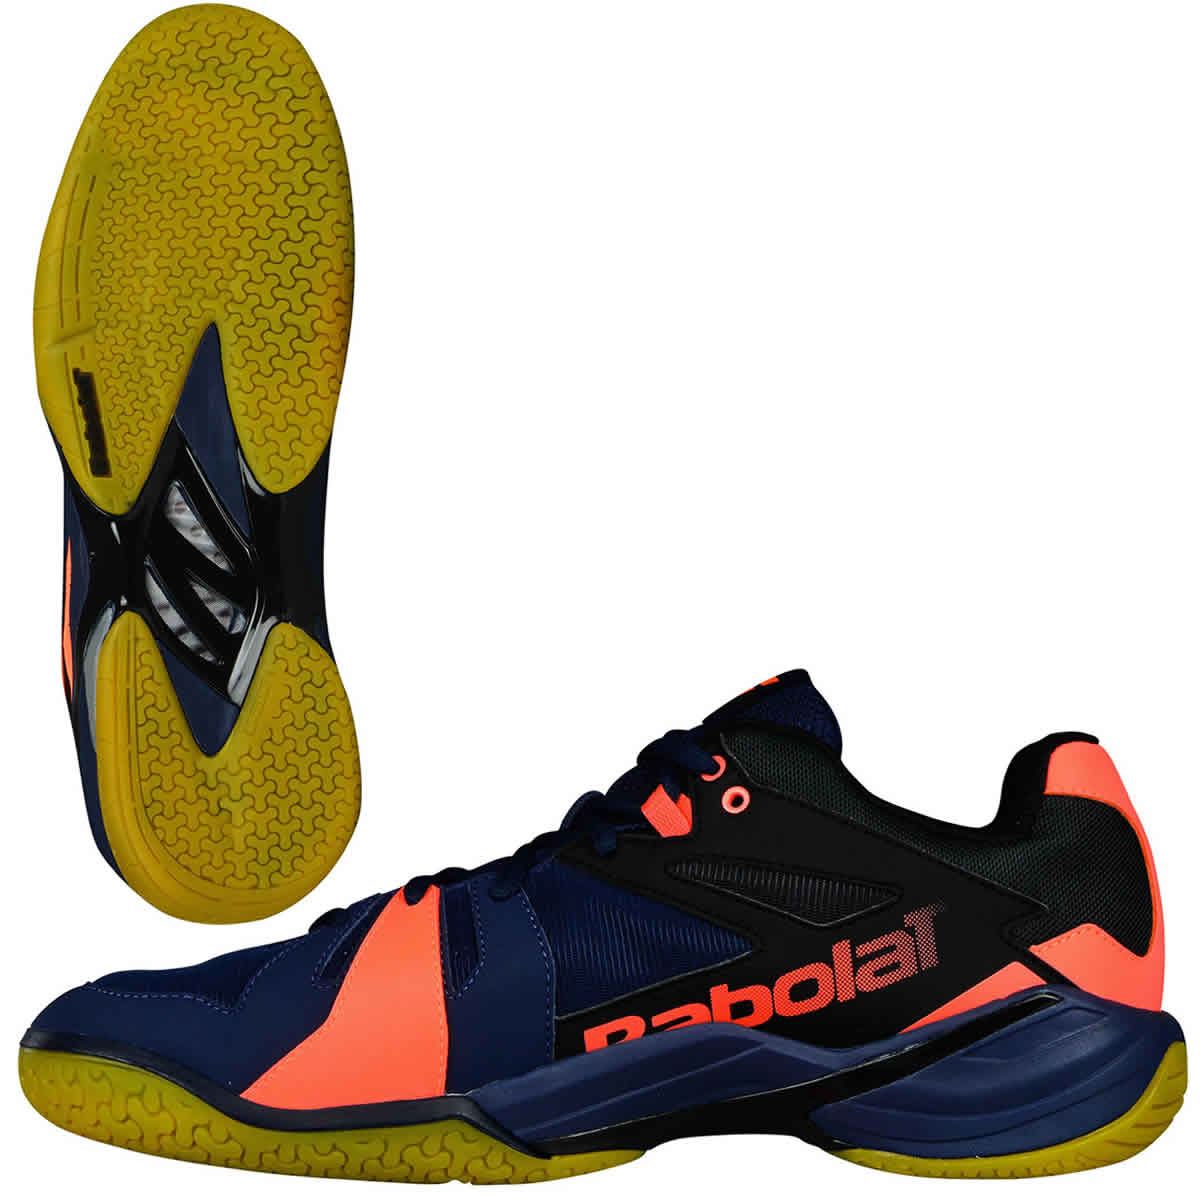 Babolat Shadow Spirit Badminton Shoes - Navy Blue Fluo Orange